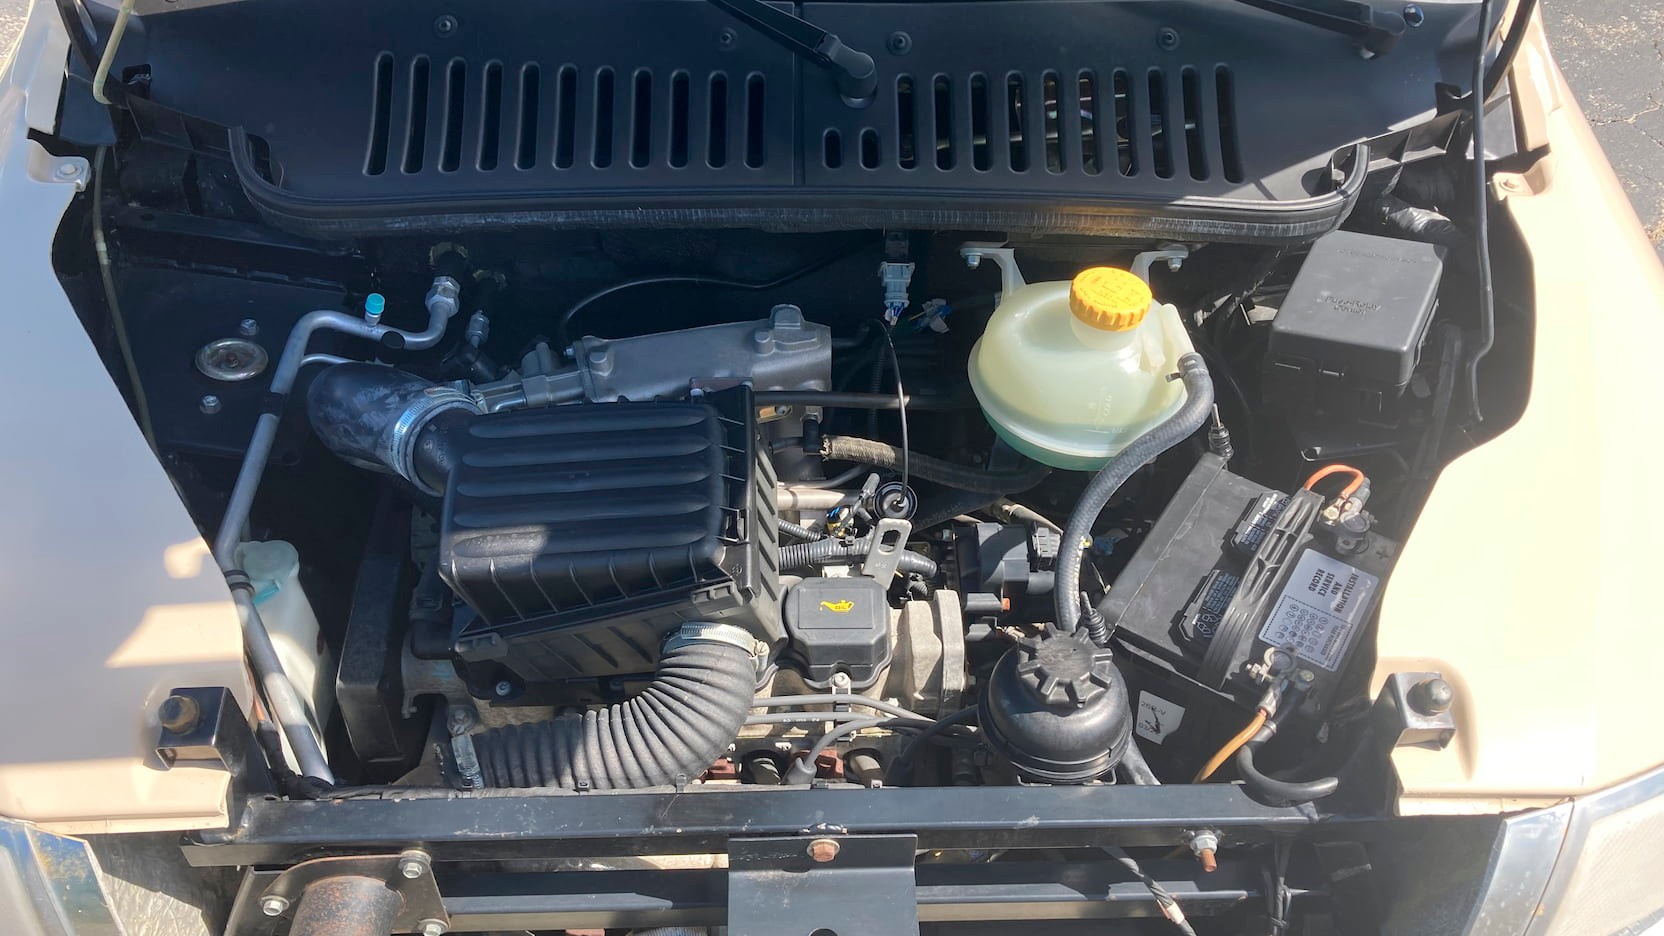 Under panseret finner du en 1,5-liters motor med Buick merker.